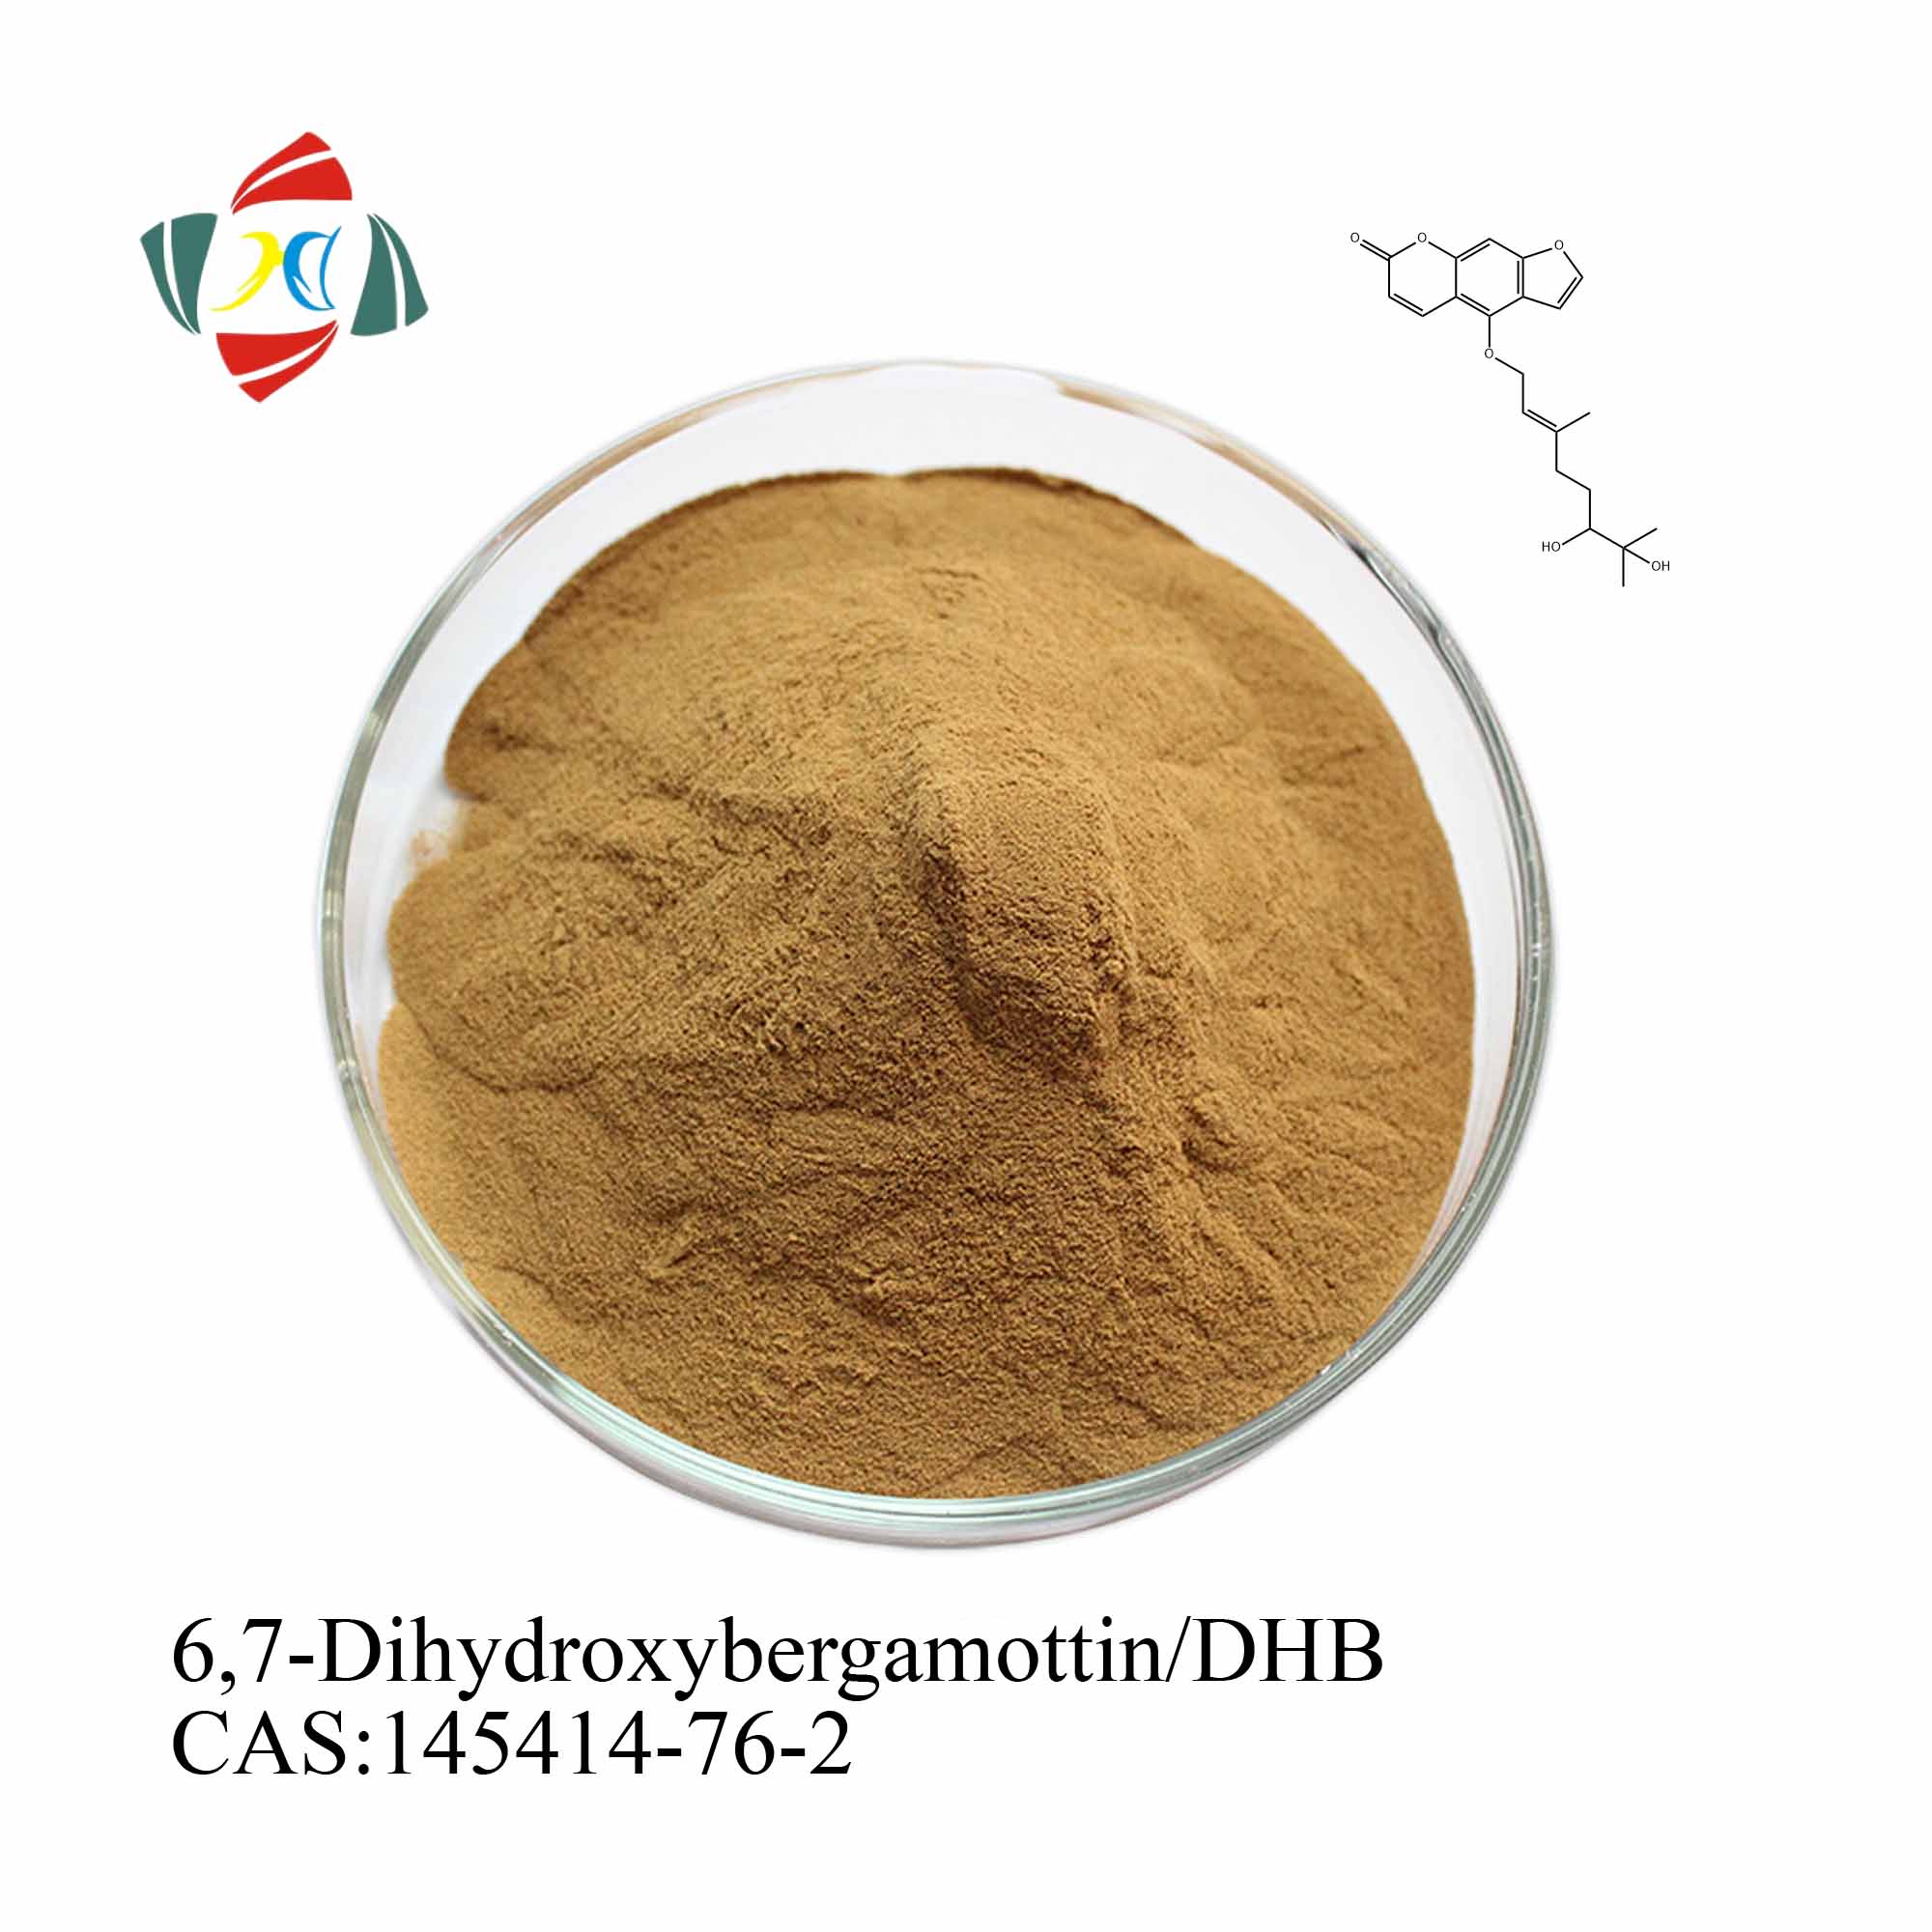 Extrait de racine d'ortie de haute qualité 45% 6,7-Dihydroxybergamottin/DHB 95% 3,4-Divanillyltetrahydrofuran /DVTHF